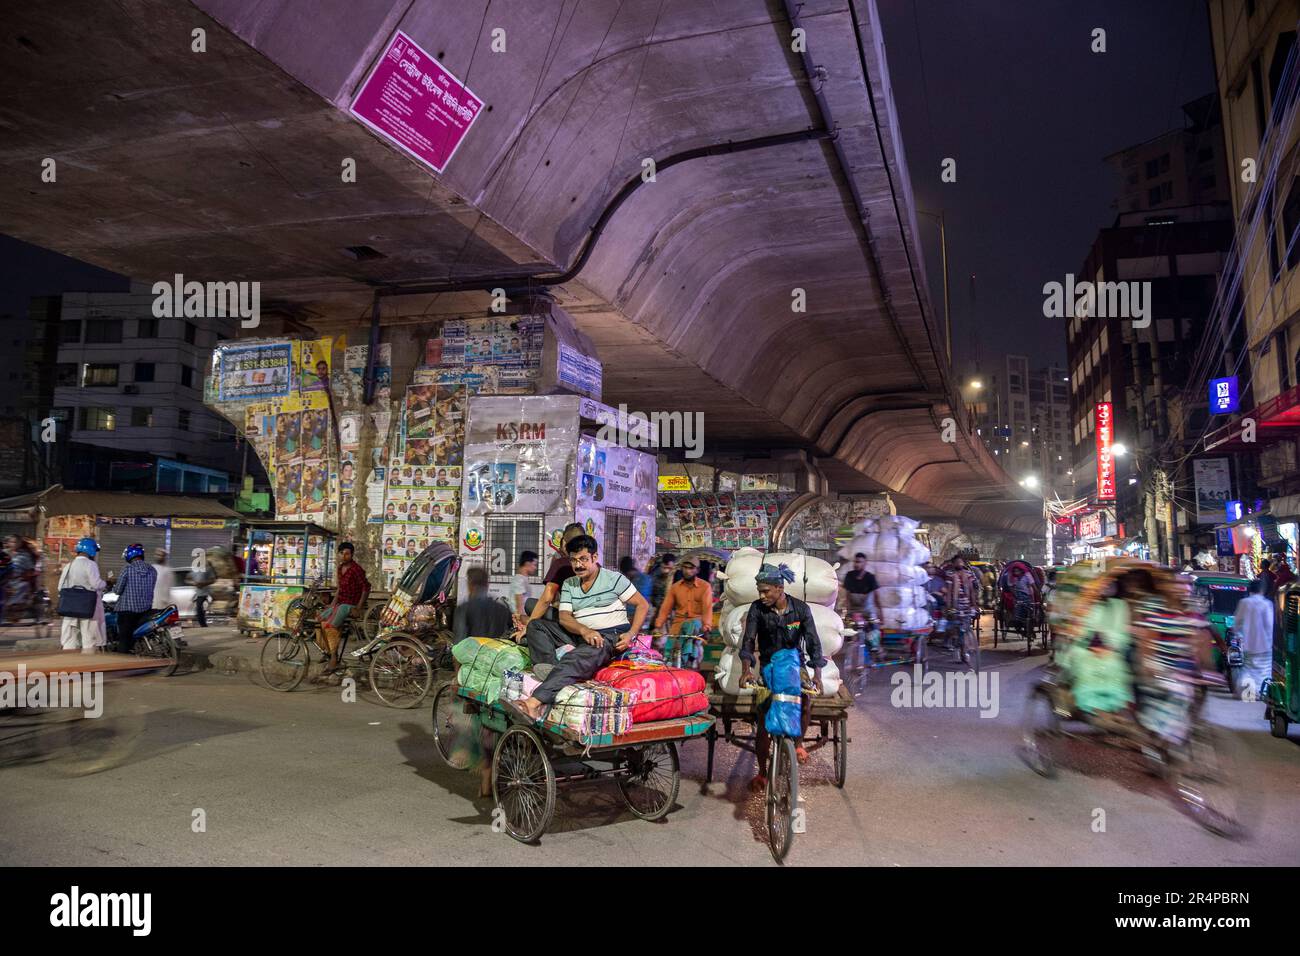 Cycle Rickshaw traffic under a flyover in Old Town Dhaka, Bangladesh Stock Photo